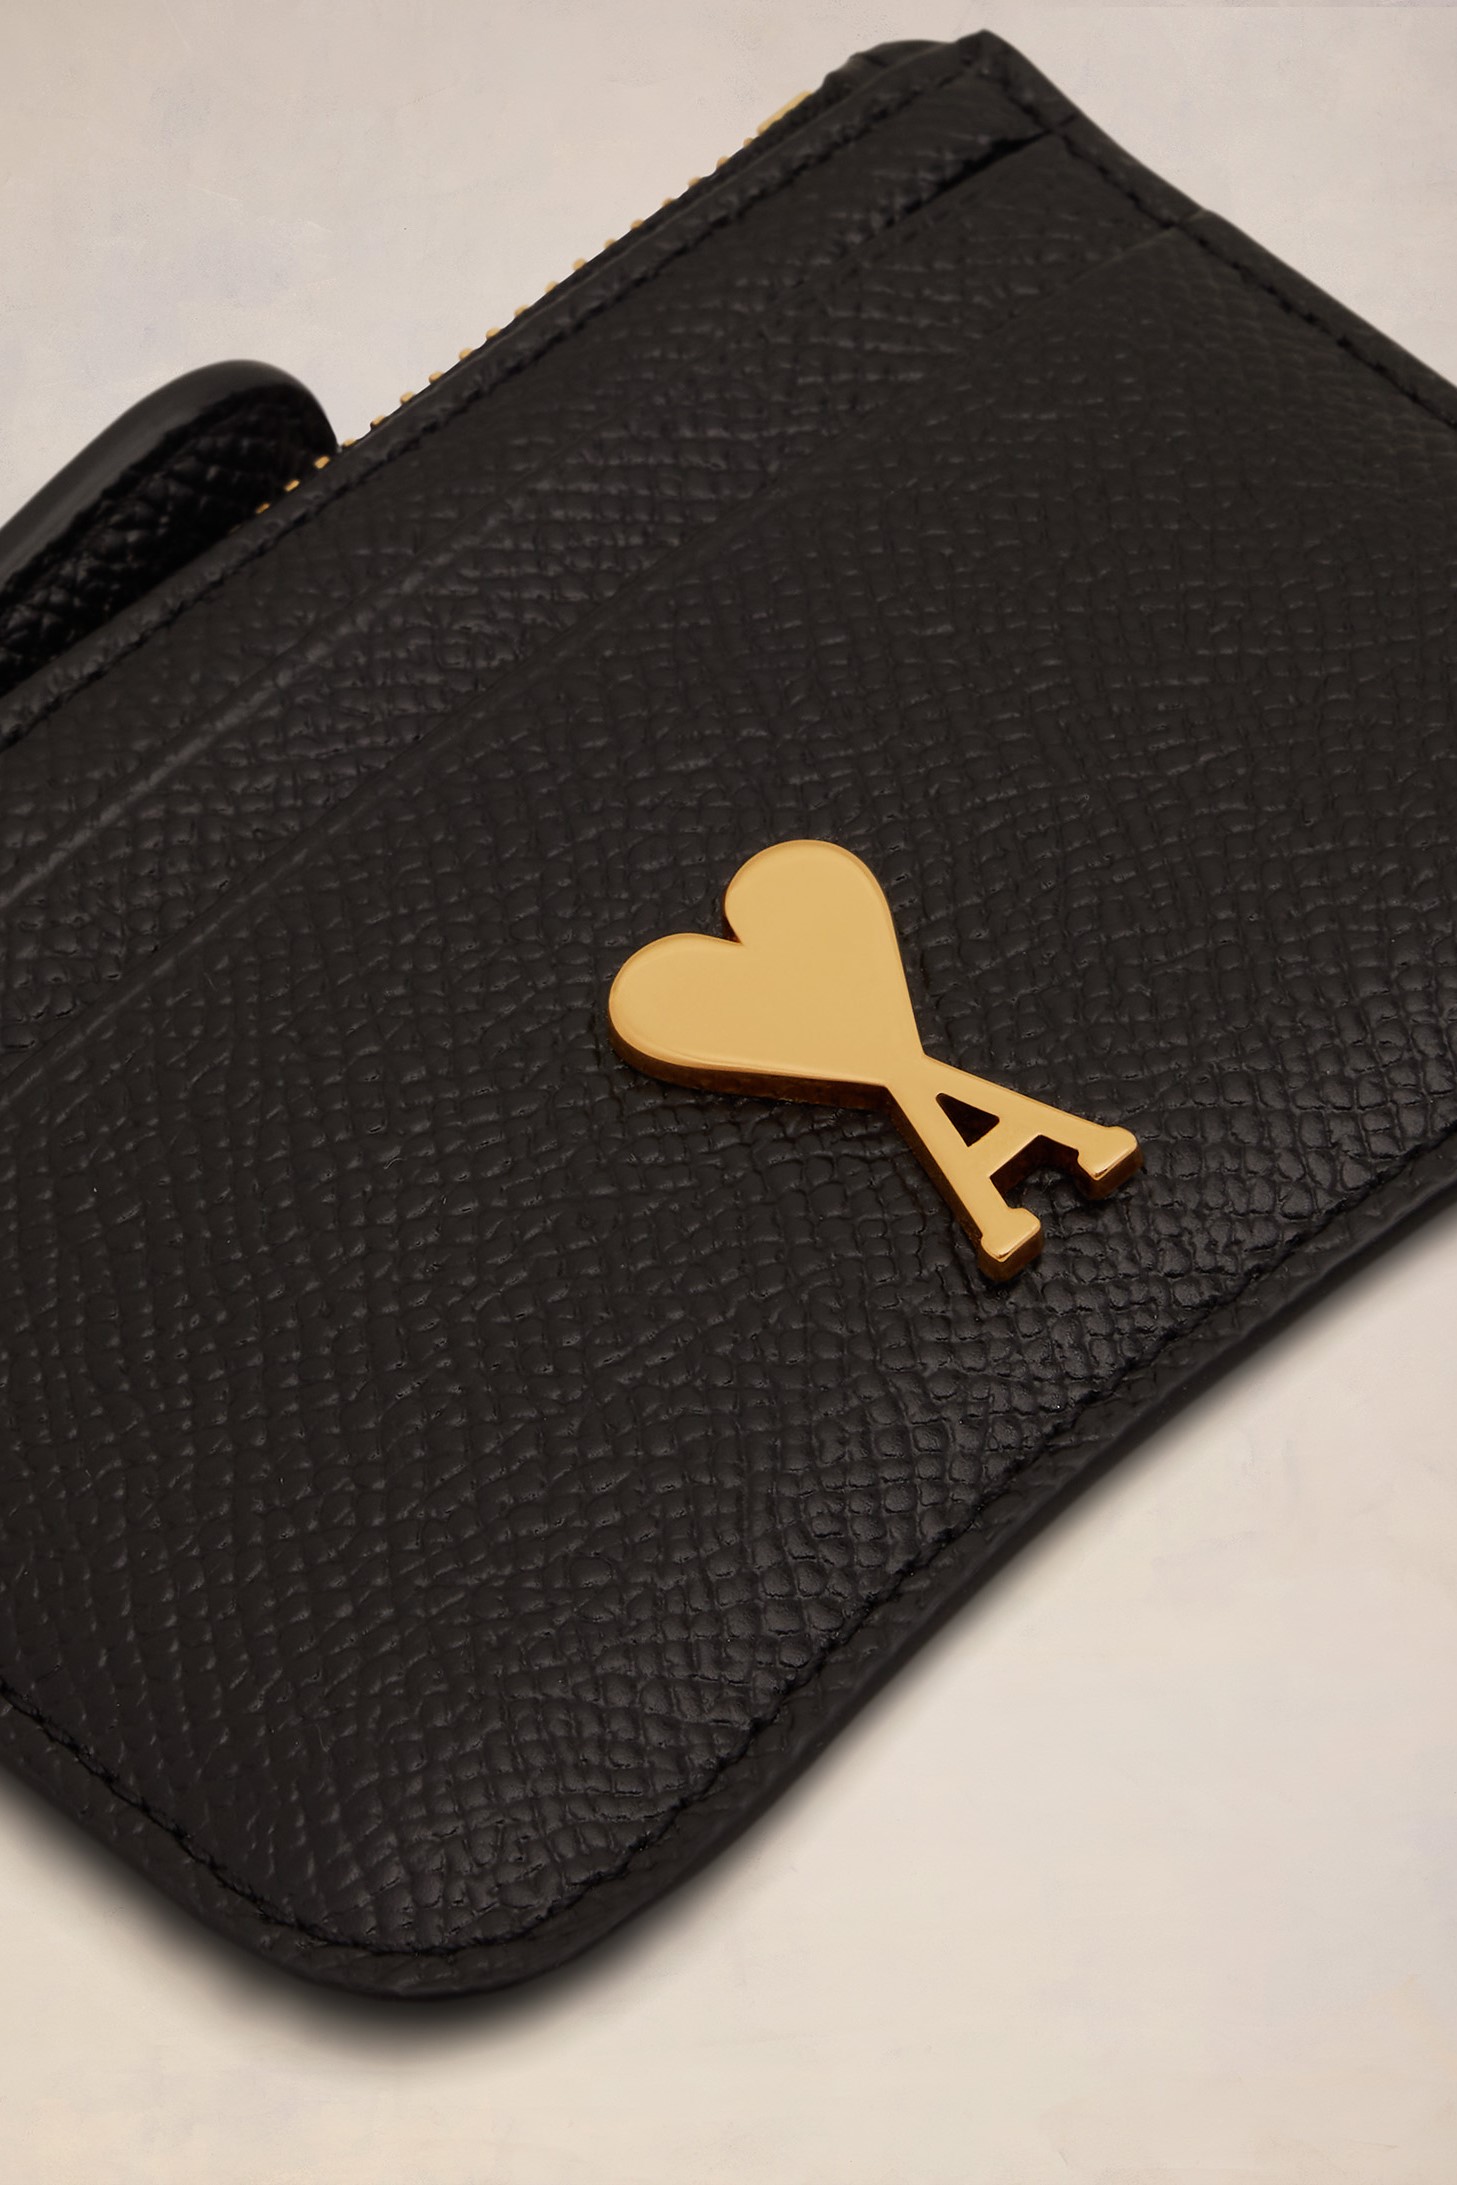 AMI PARIS Paris Zipped Card Holder in Black/Vibrated Brass